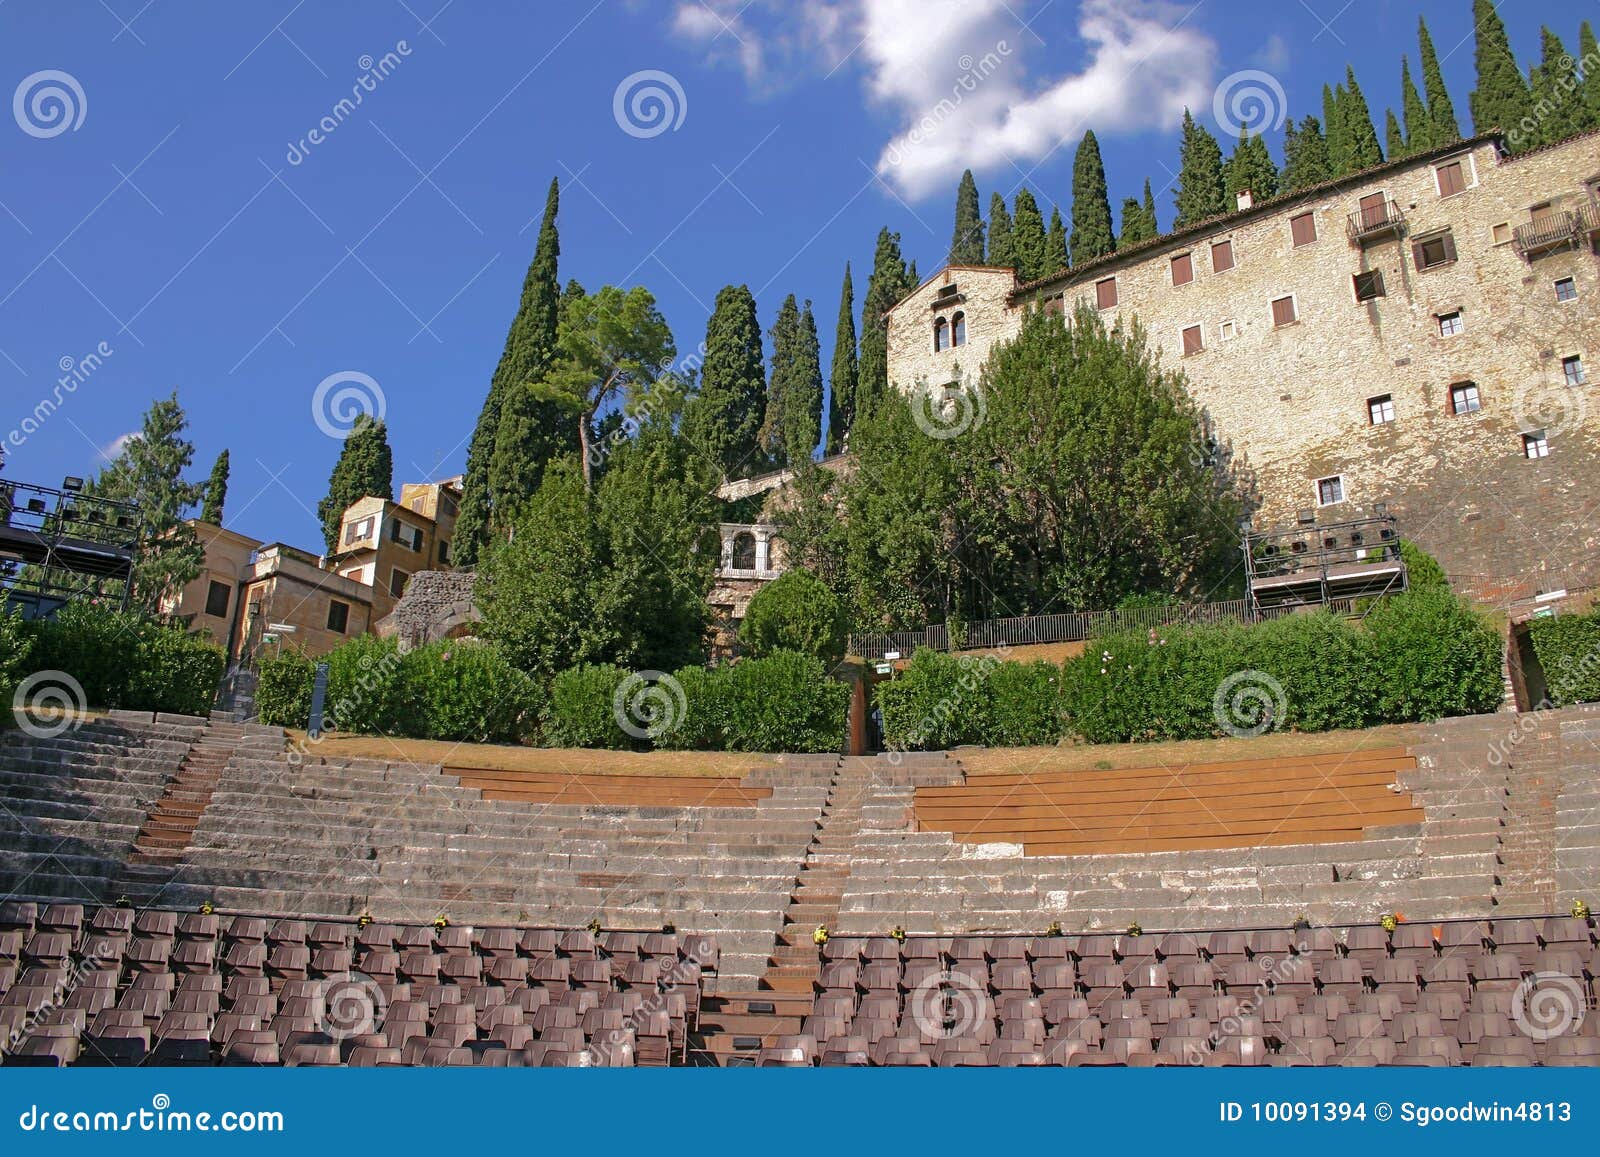 amphitheatre of the teatro romano in verona, italy